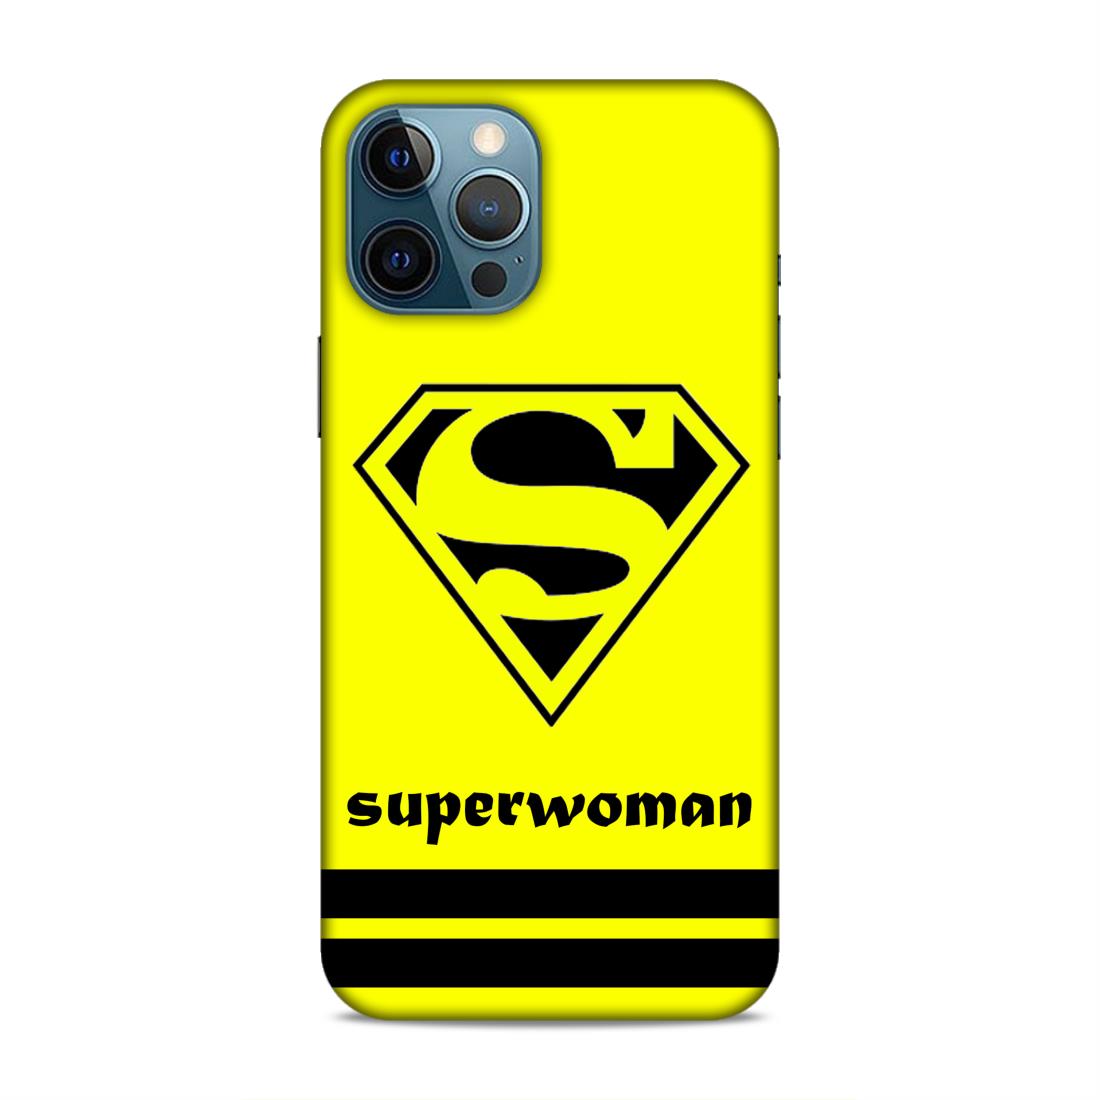 Superwomen Hard Back Case For Apple iPhone 12 Pro Max